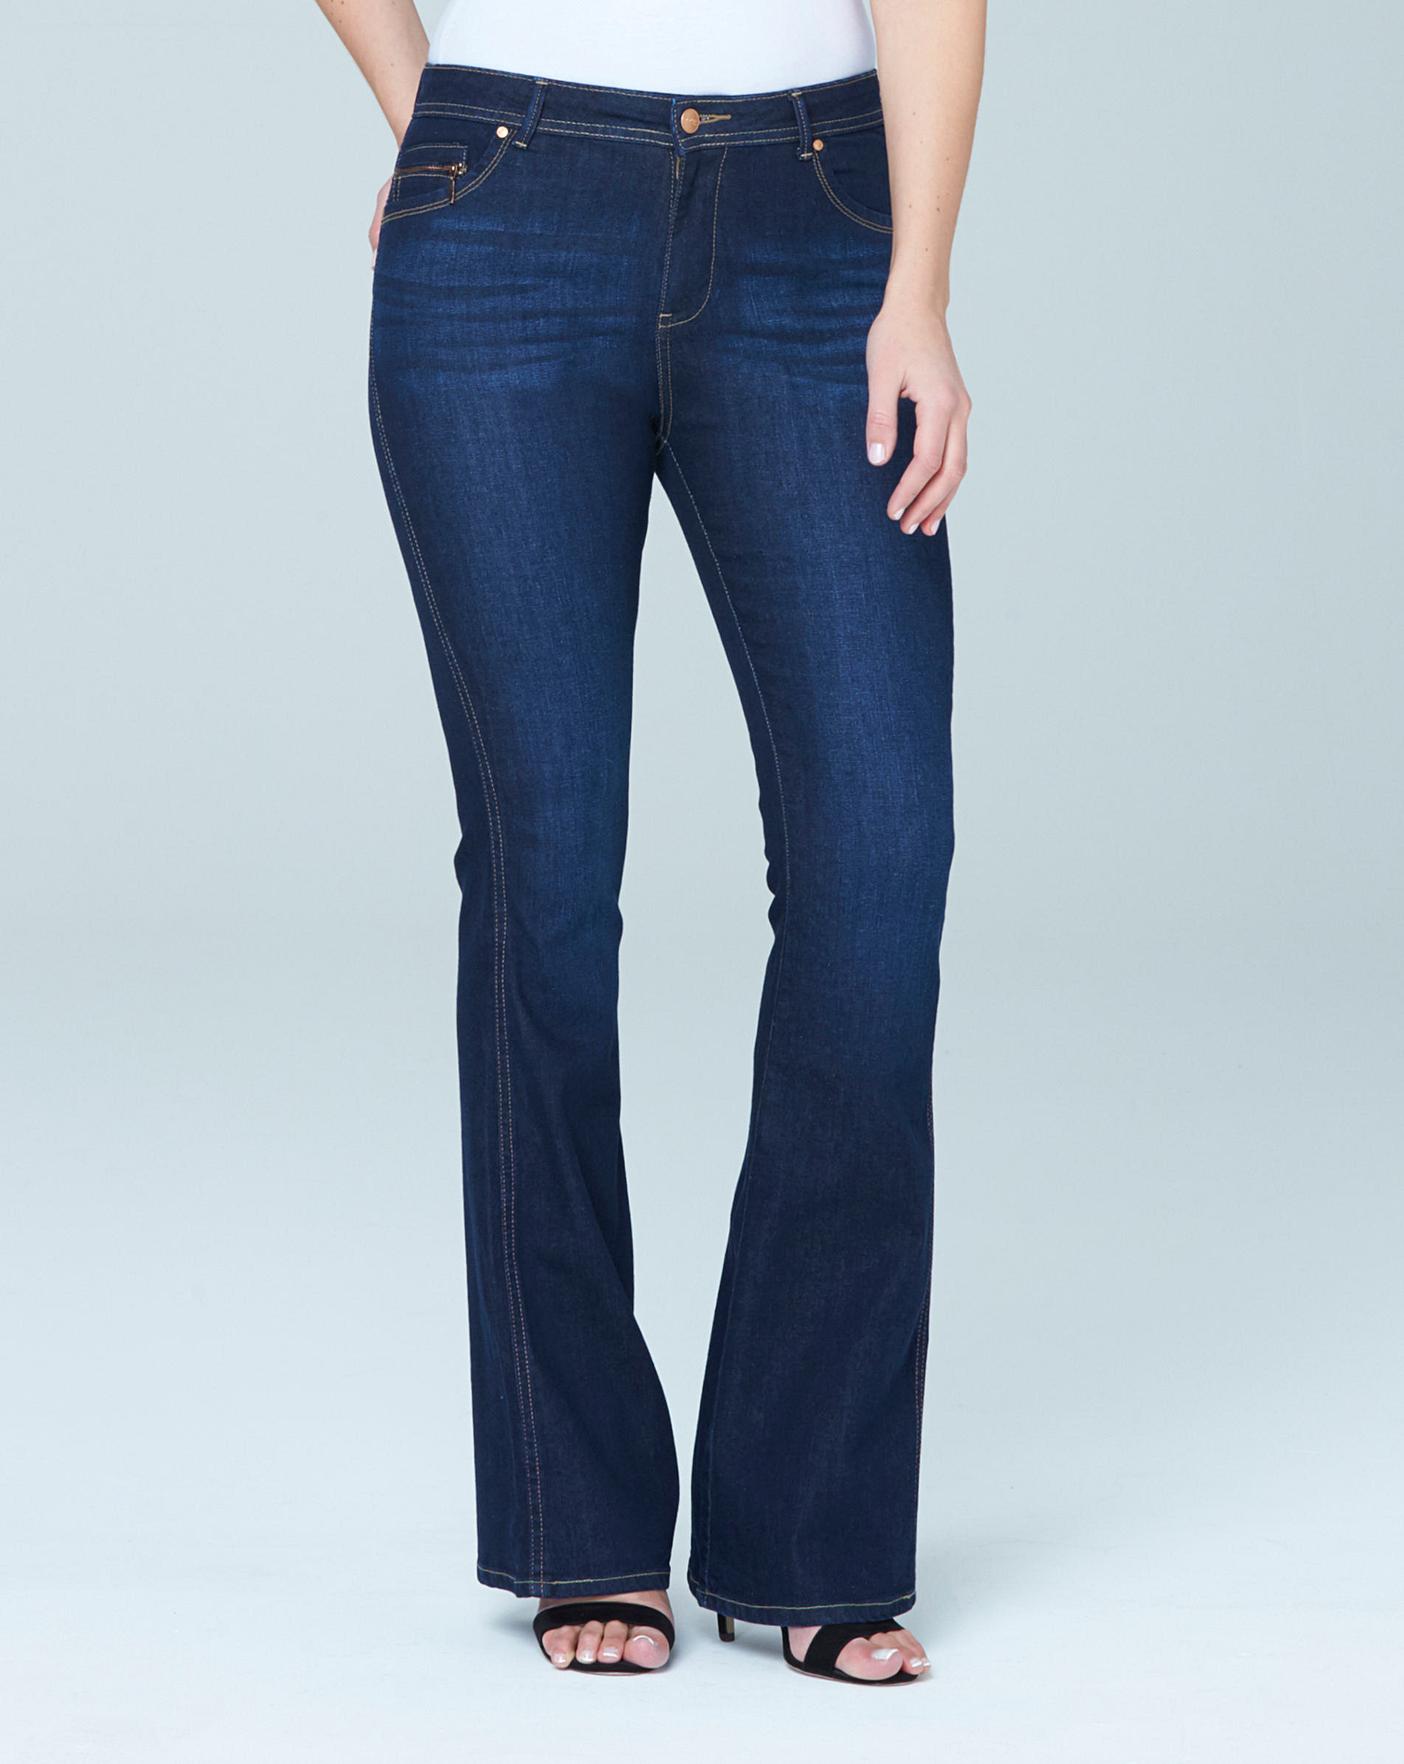 bootcut jeans short length